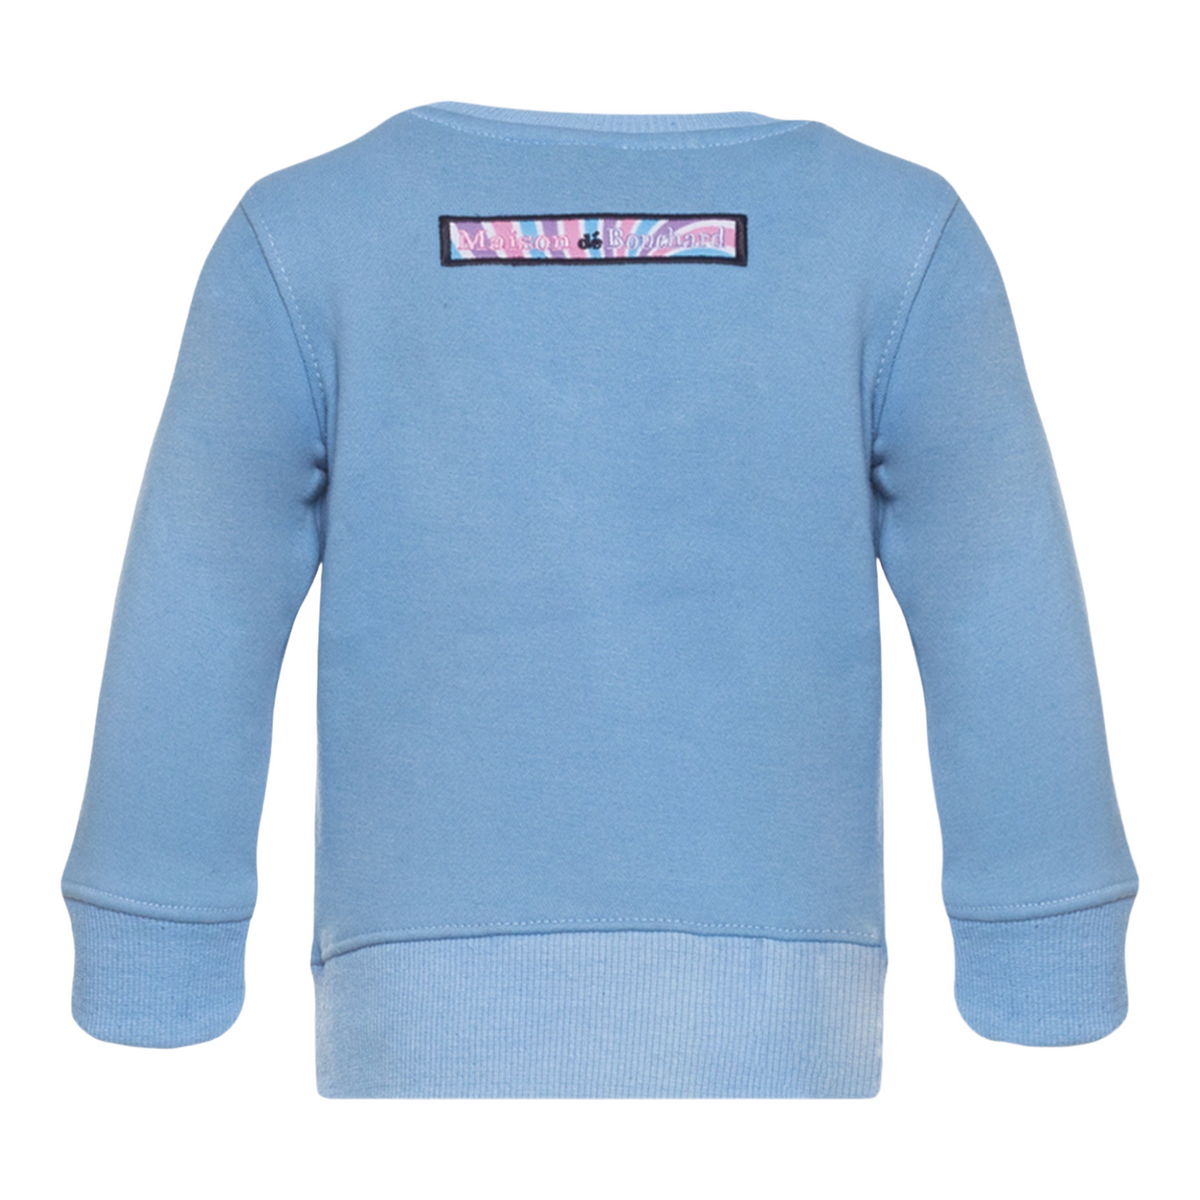 MDB Brand Kid's "The M Brand" Swirl Crewneck Sweatshirt - Blue